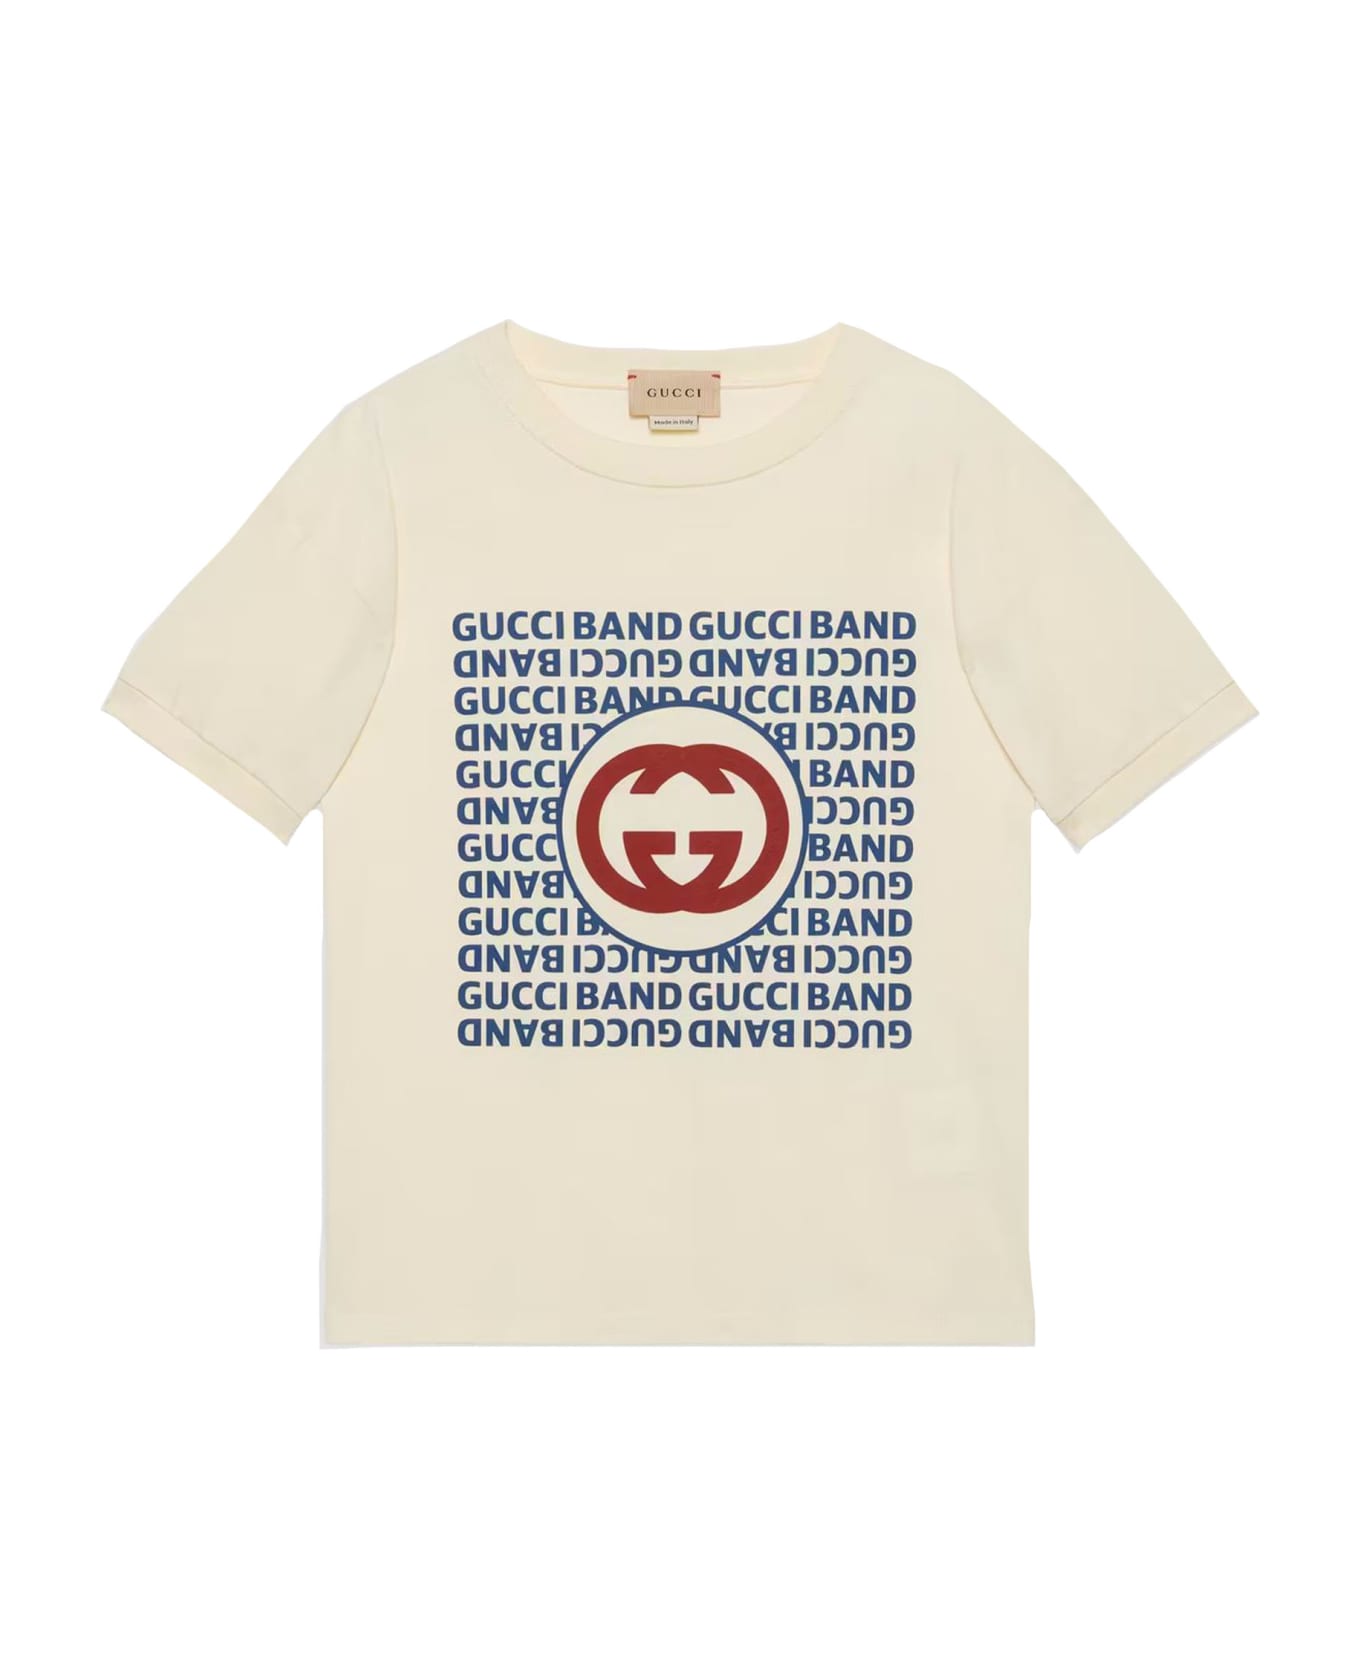 Gucci White Cotton Jersey T-shirt - Beige